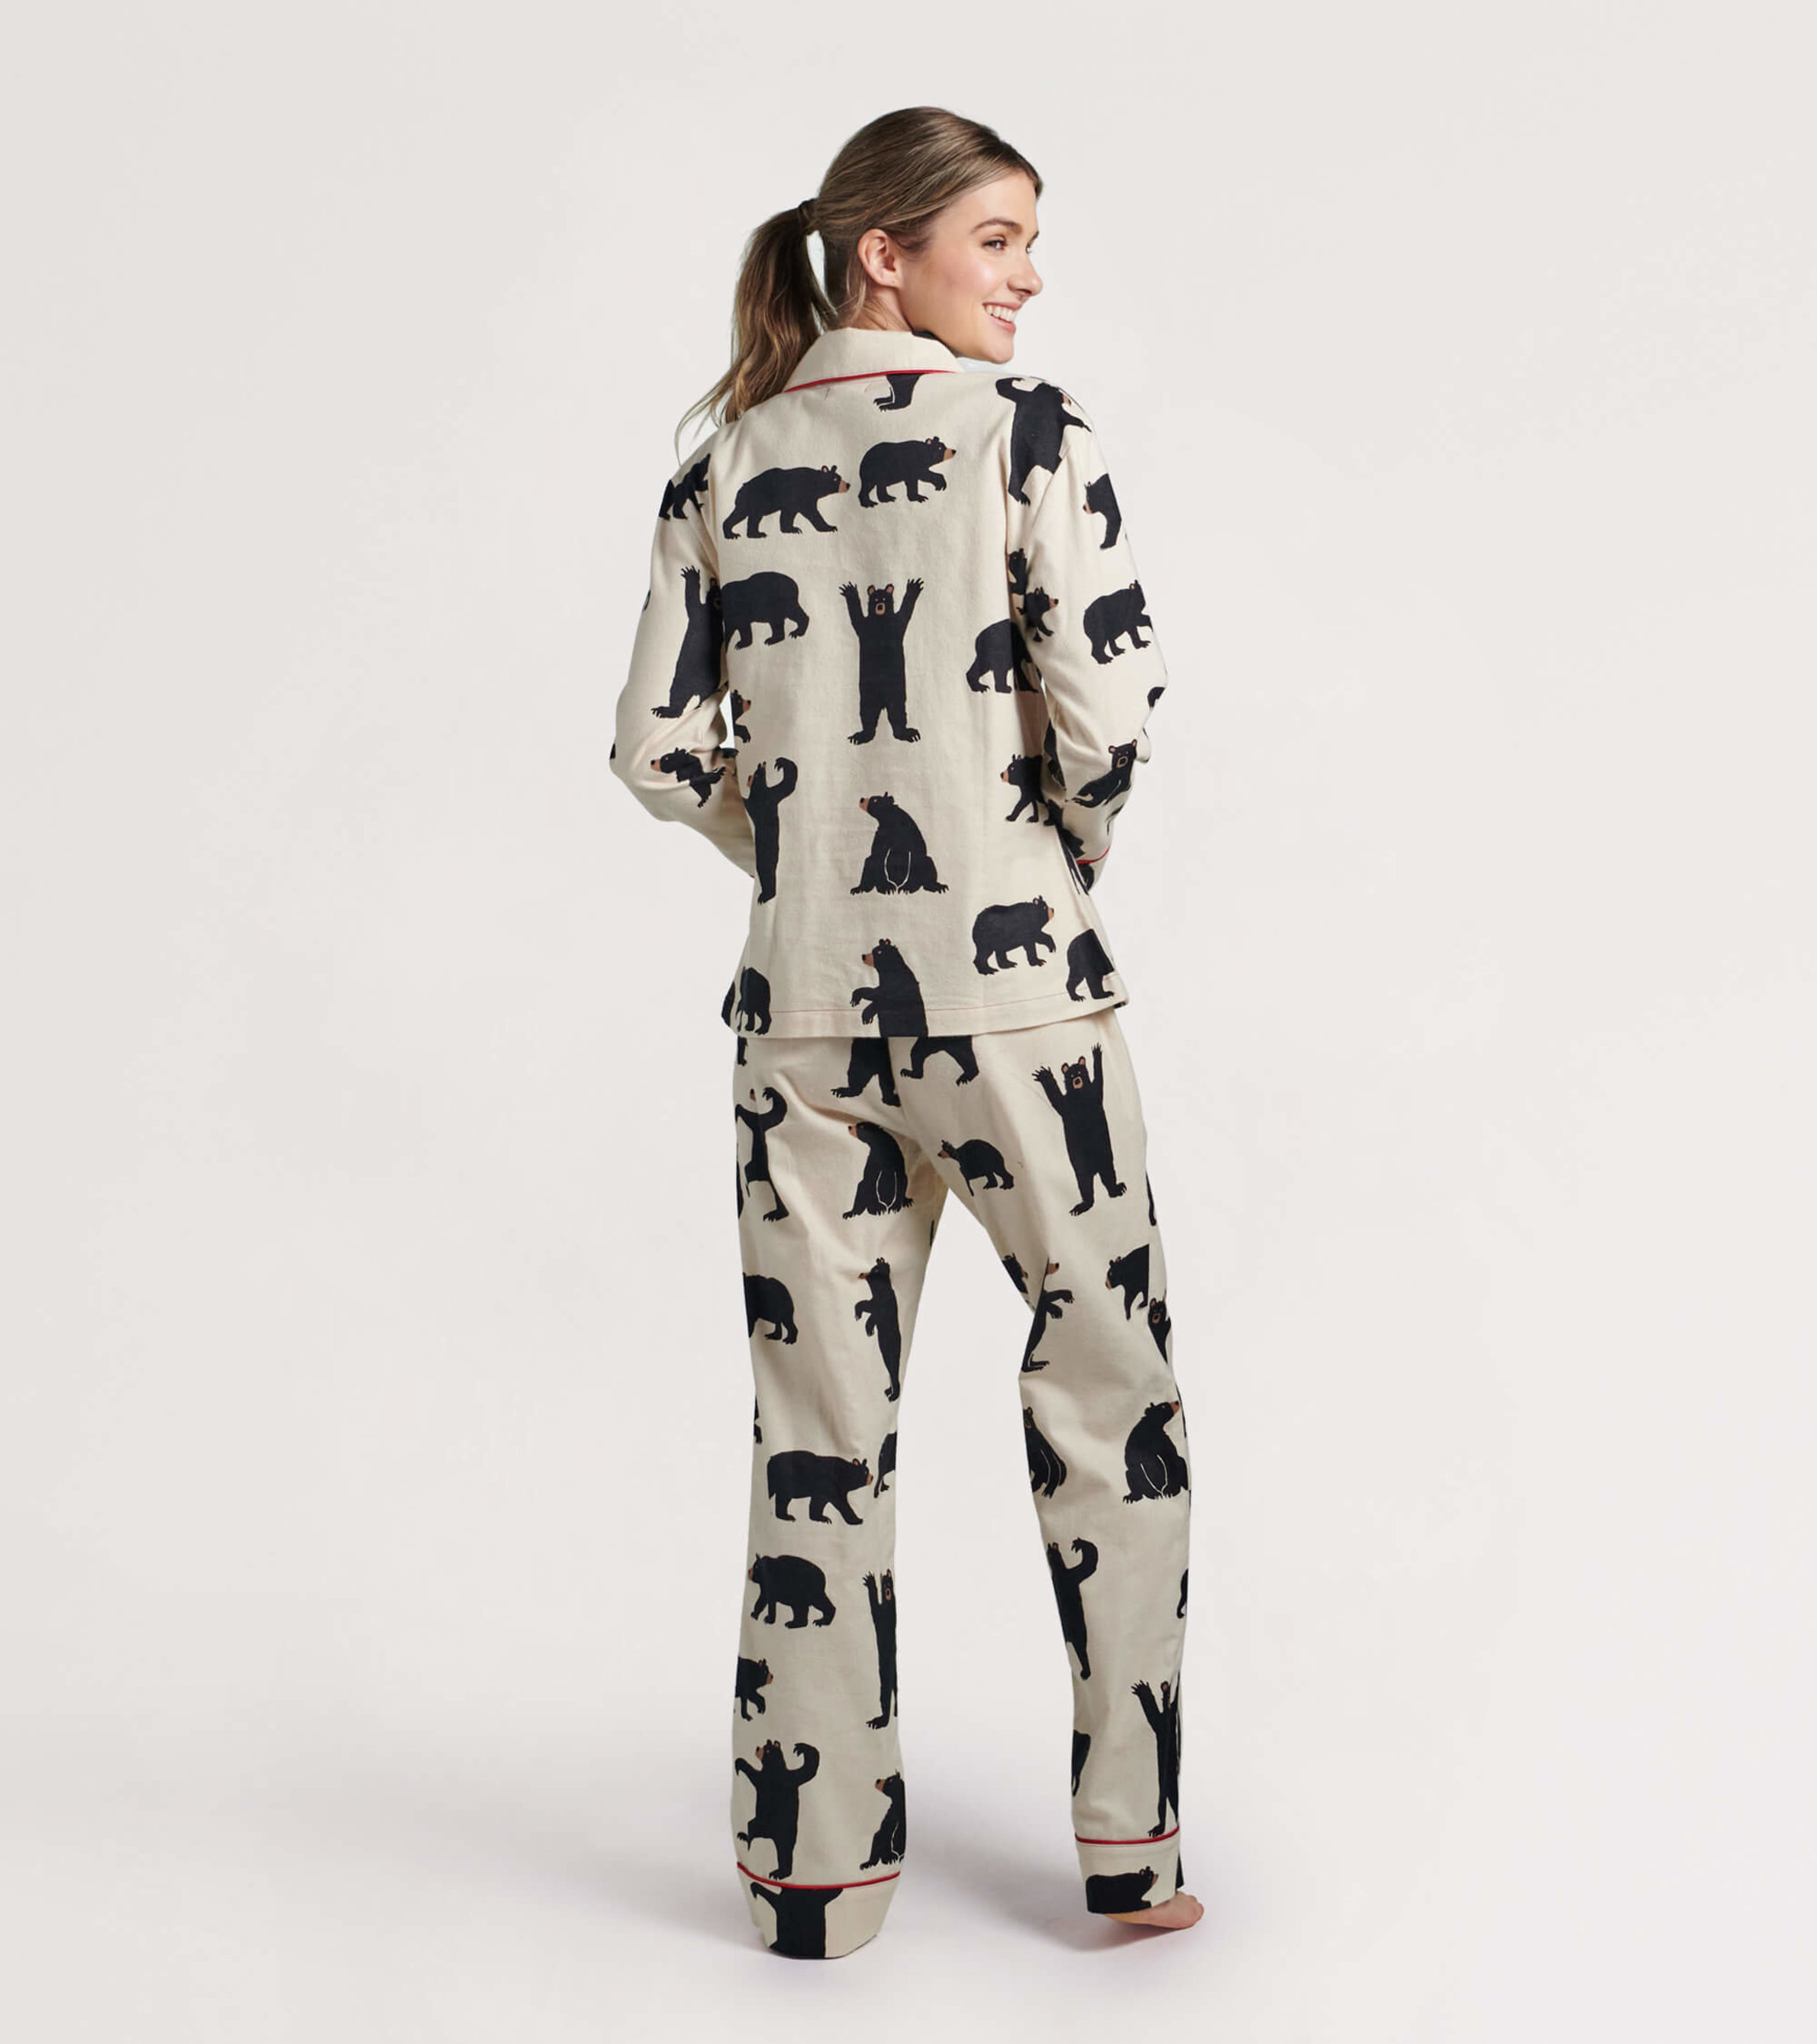 Flannel People Women Pajamas Set - 100% Cotton Flannel Pajamas